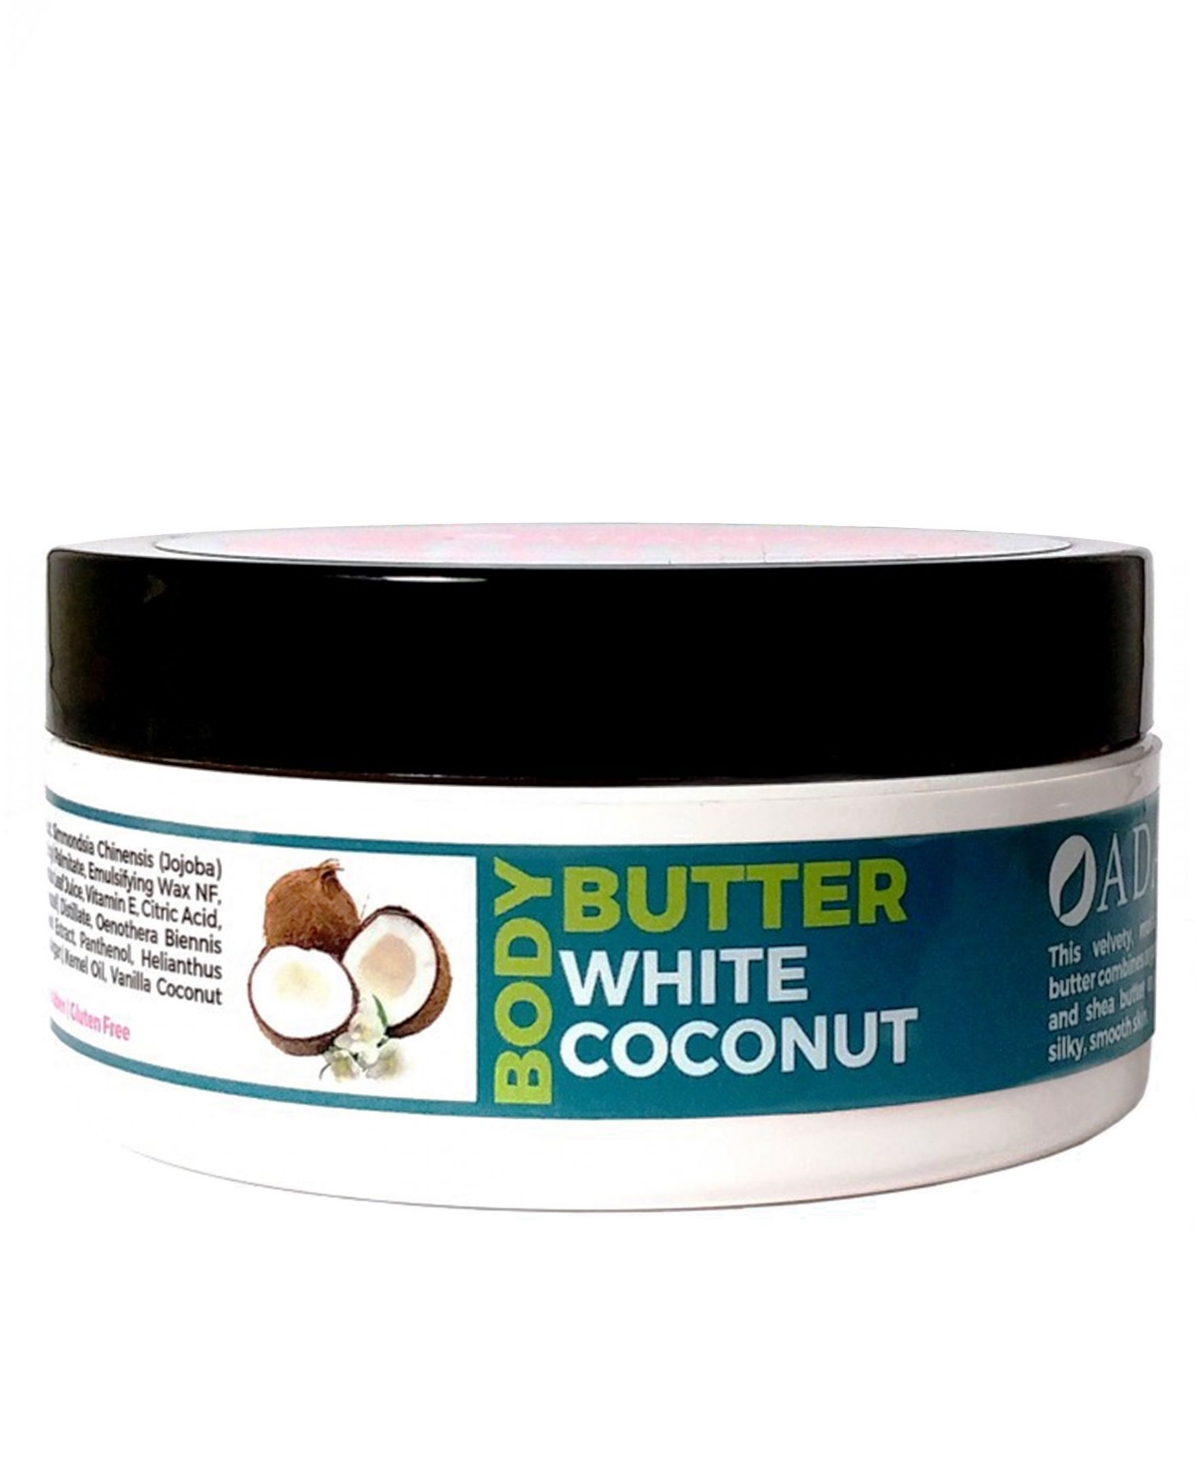 Body Butter Argan White Coconut, 4 oz - No COLOR